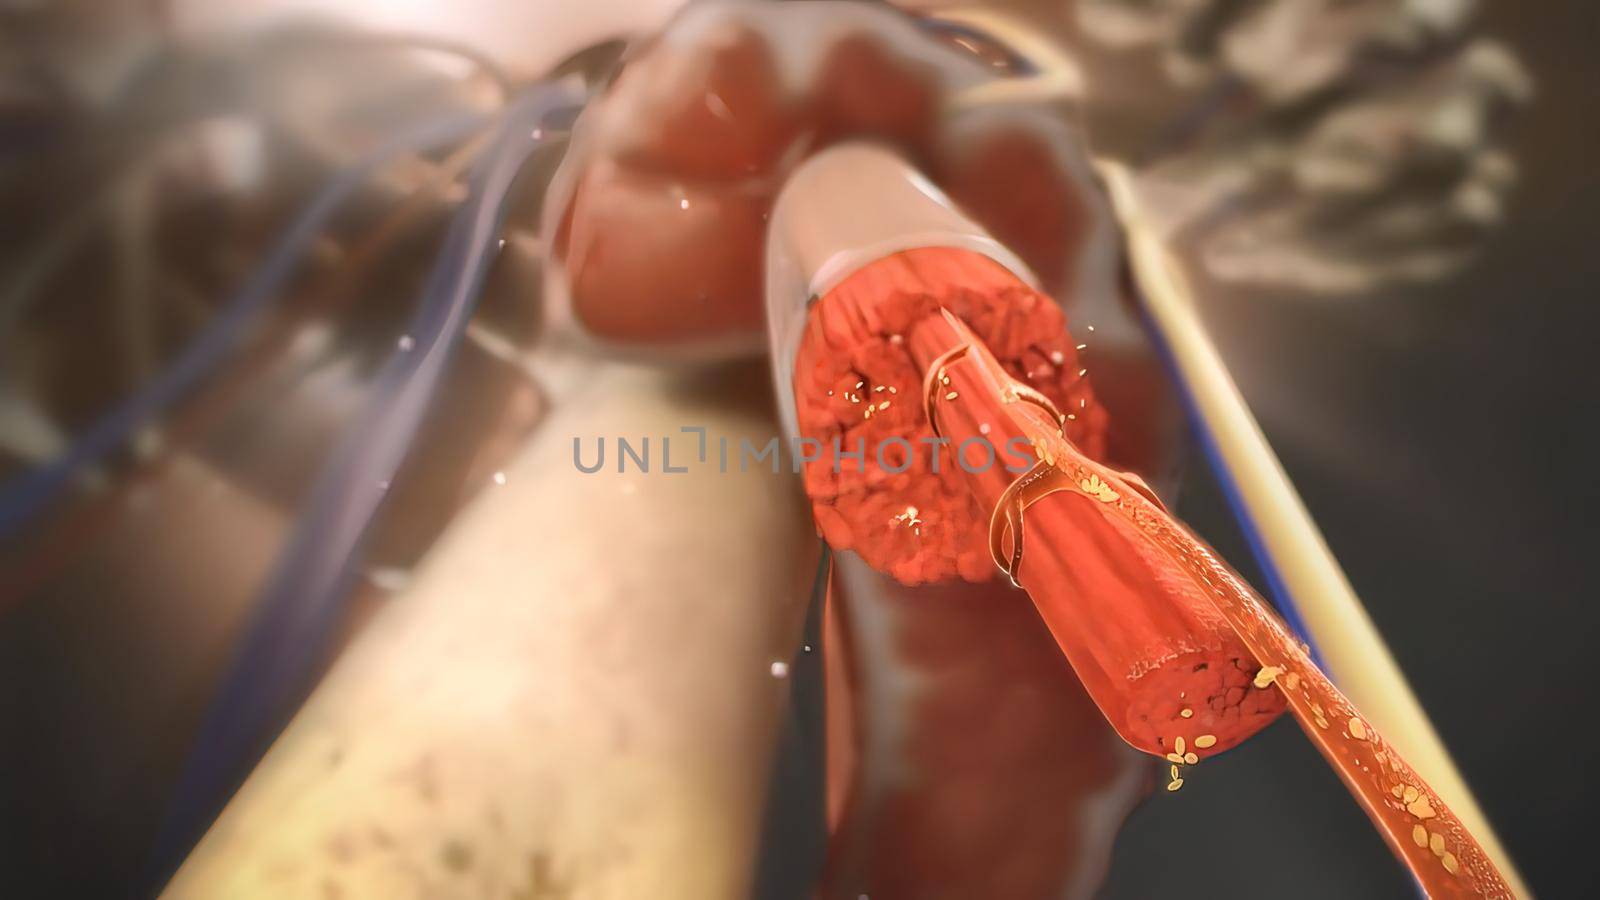 Human Circulatory System Anatomy Concept. 3d illustration